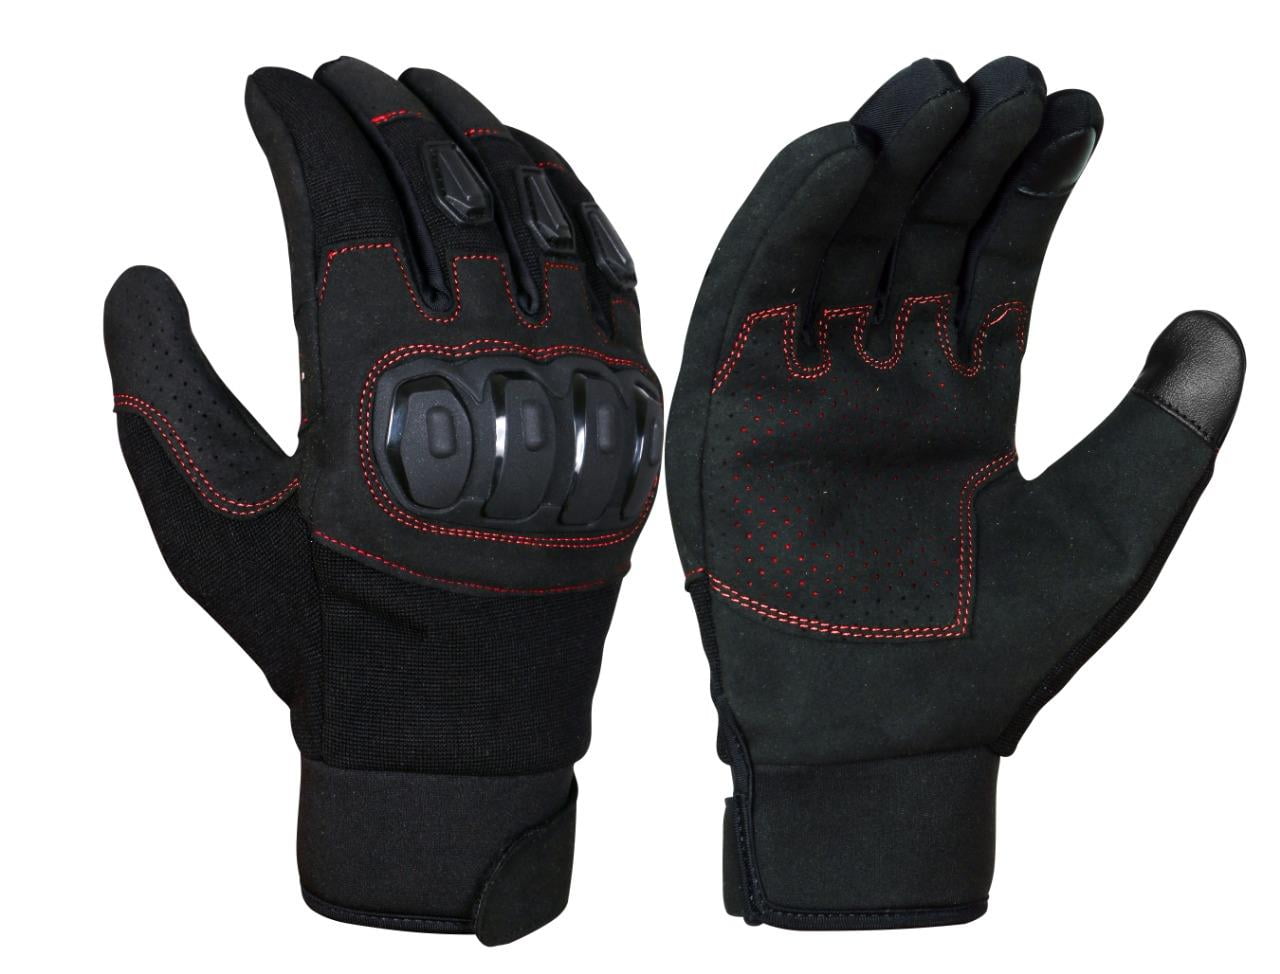 Qepae Bicycle Skeleton Pattern Full Finger warm cycling gloves black white DT 